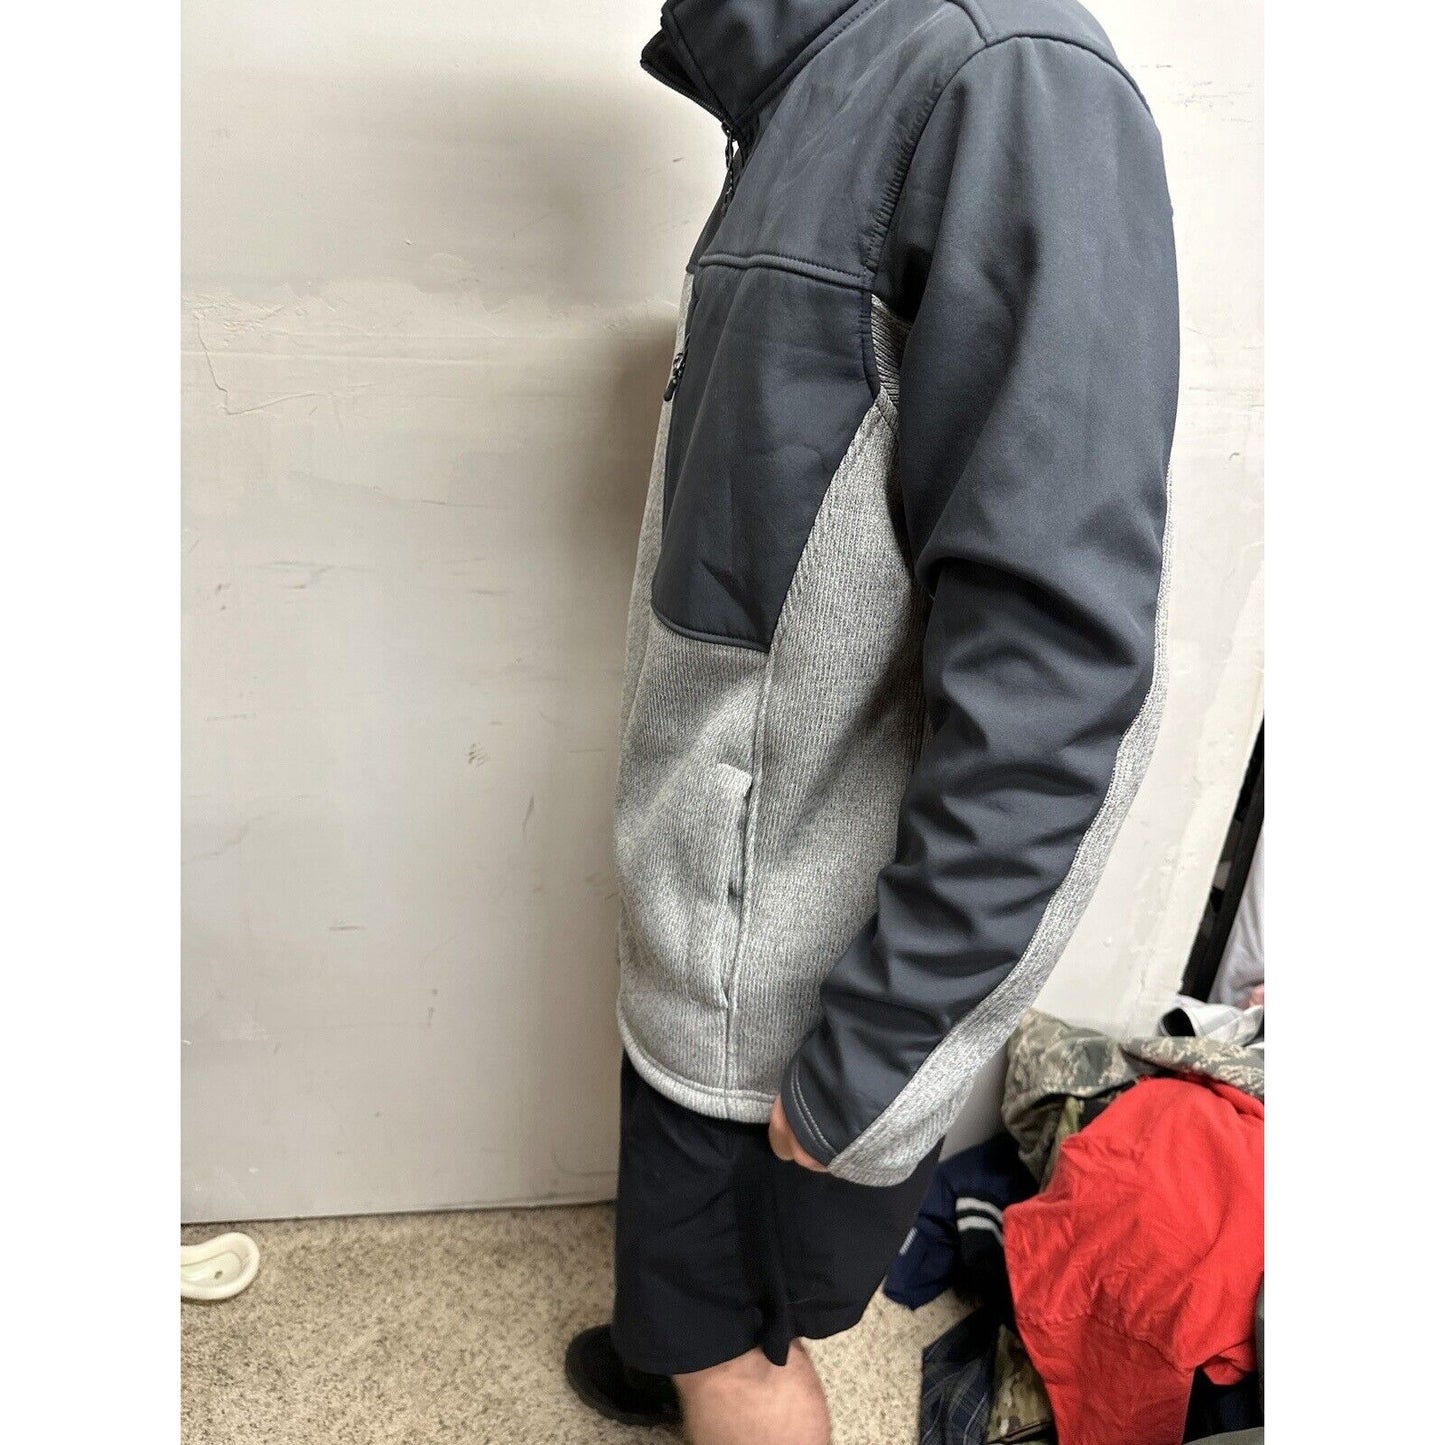 Men’s Large Swiss Tech Gray 42-44 Full Zip Jacket